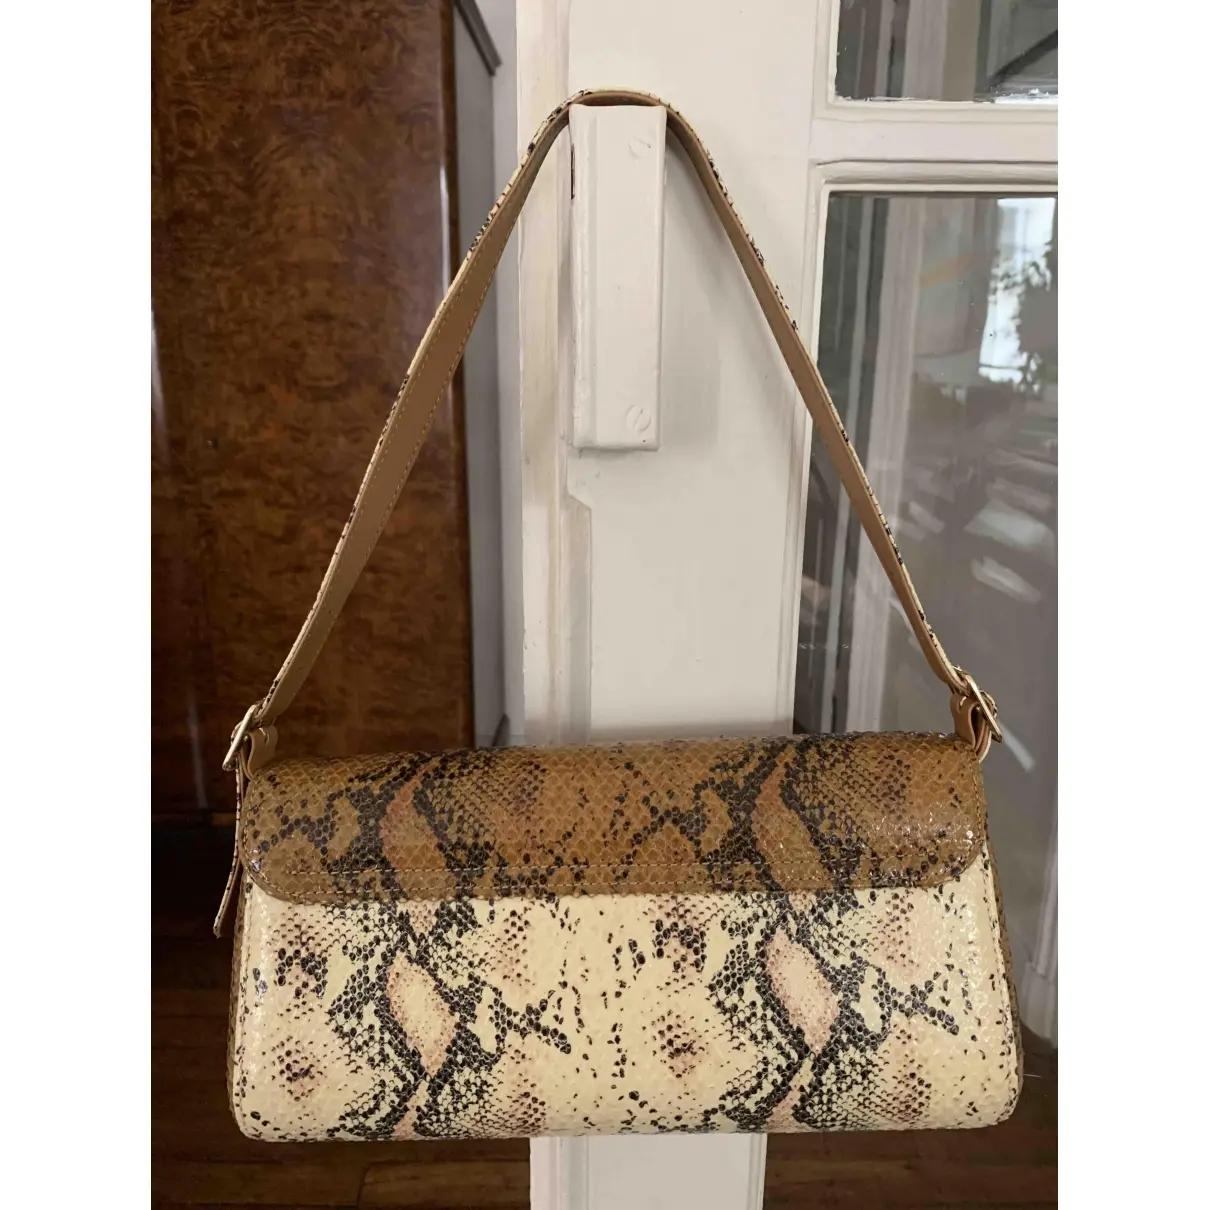 Buy Amélie Pichard Leather handbag online